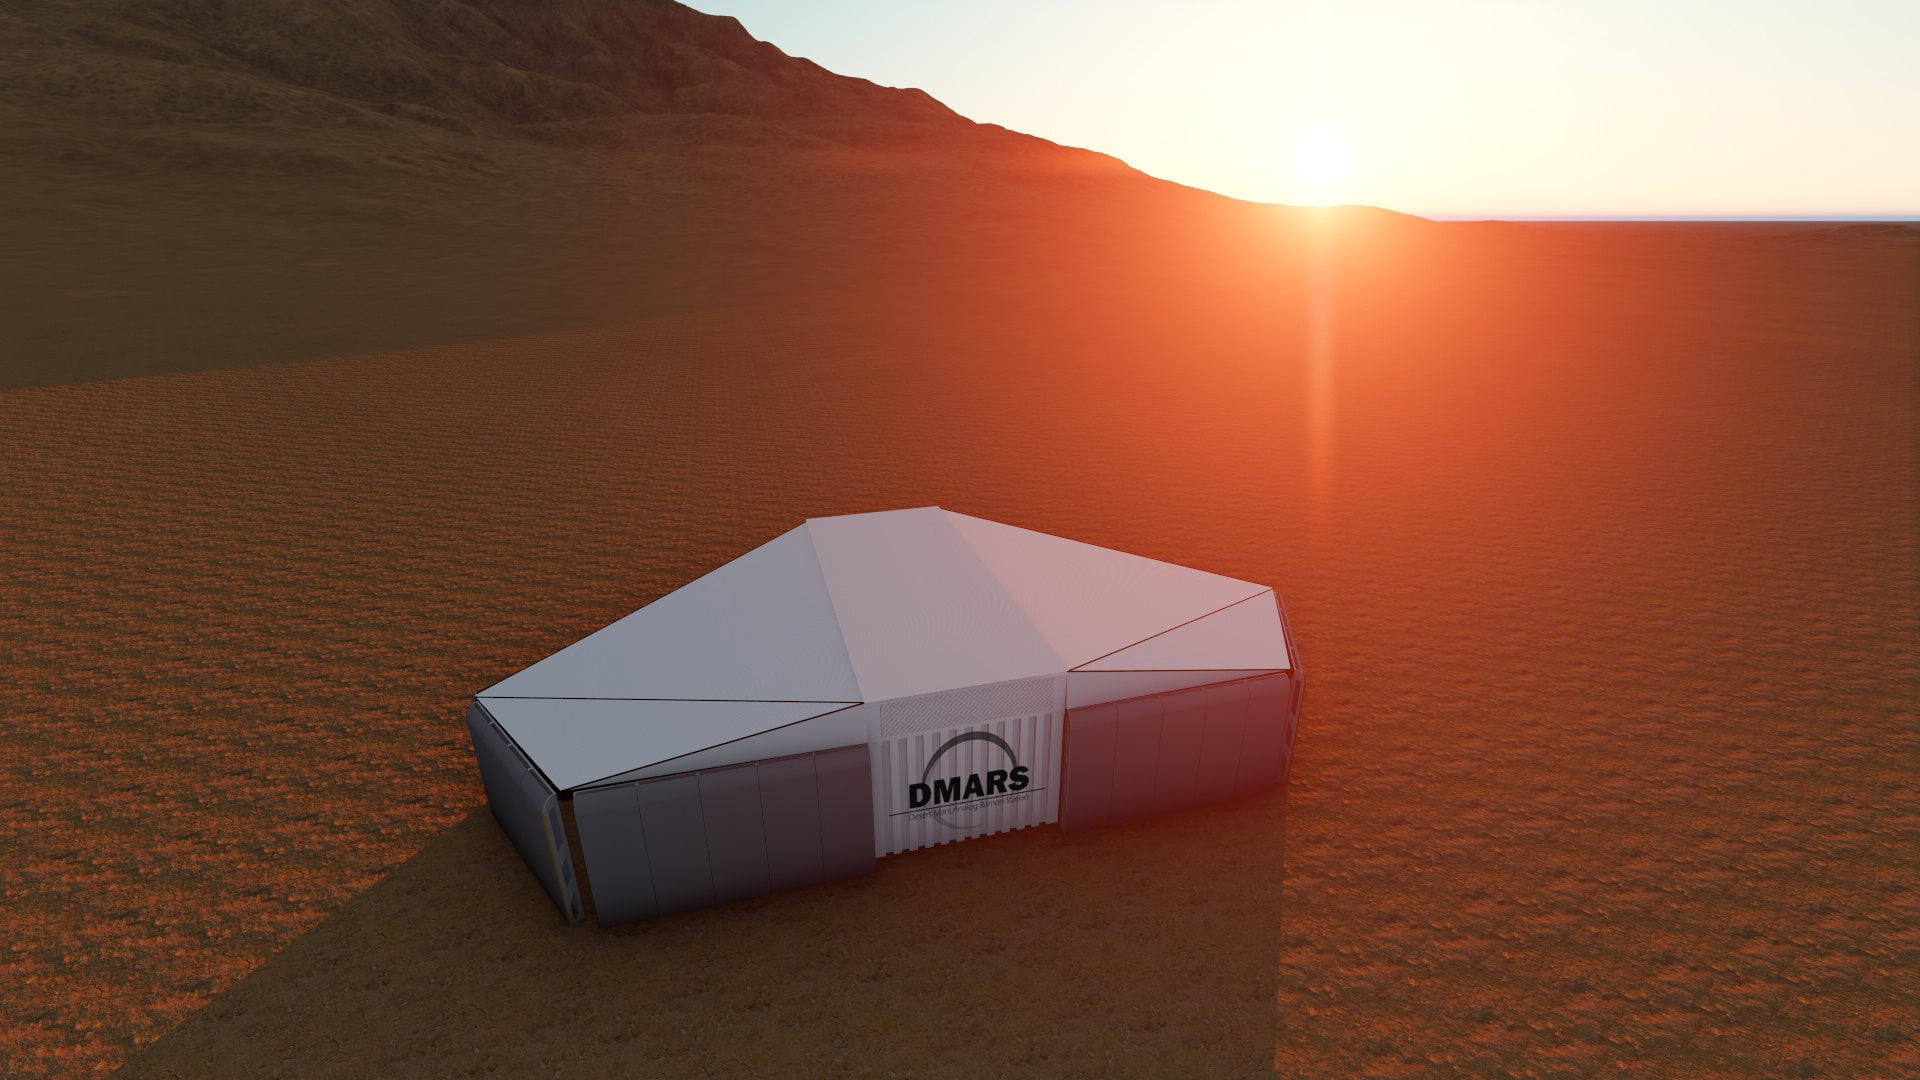 The Desert Mars Analog Ramon Station will be located near Mitzpe Ramon. Courtesy: DMars